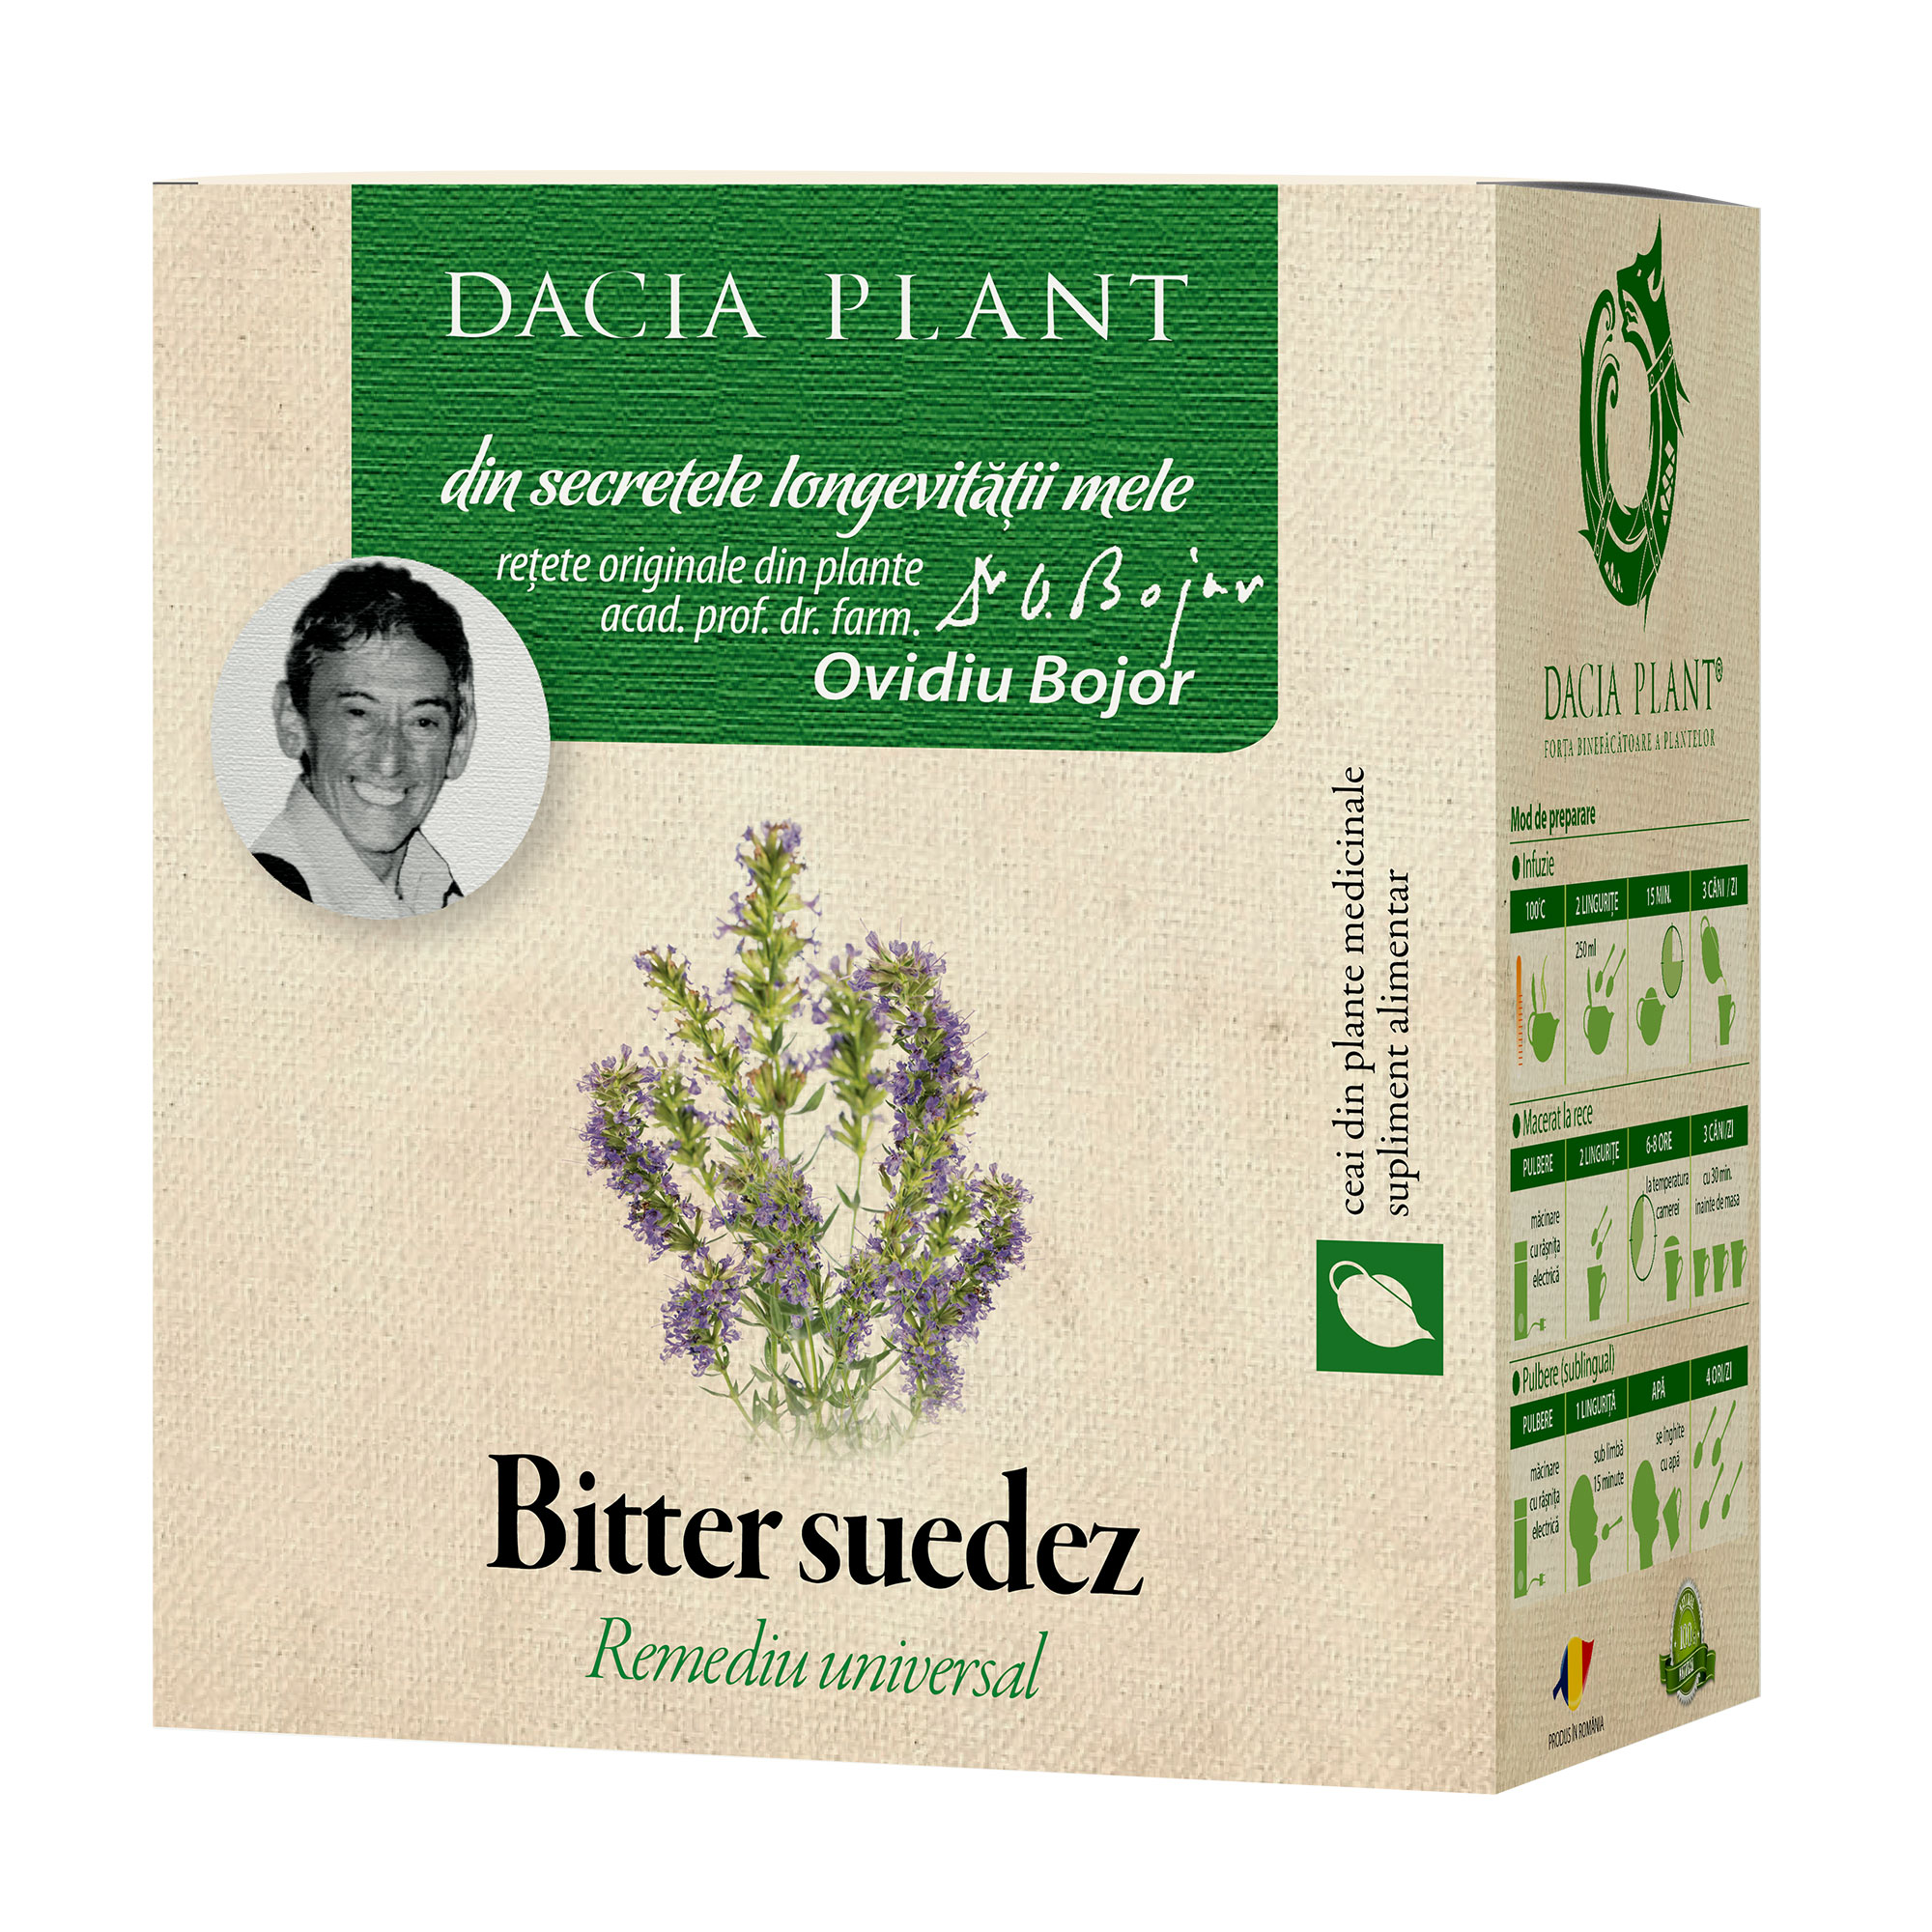 Ceai Bitter Suedez, 50g, Dacia Plant